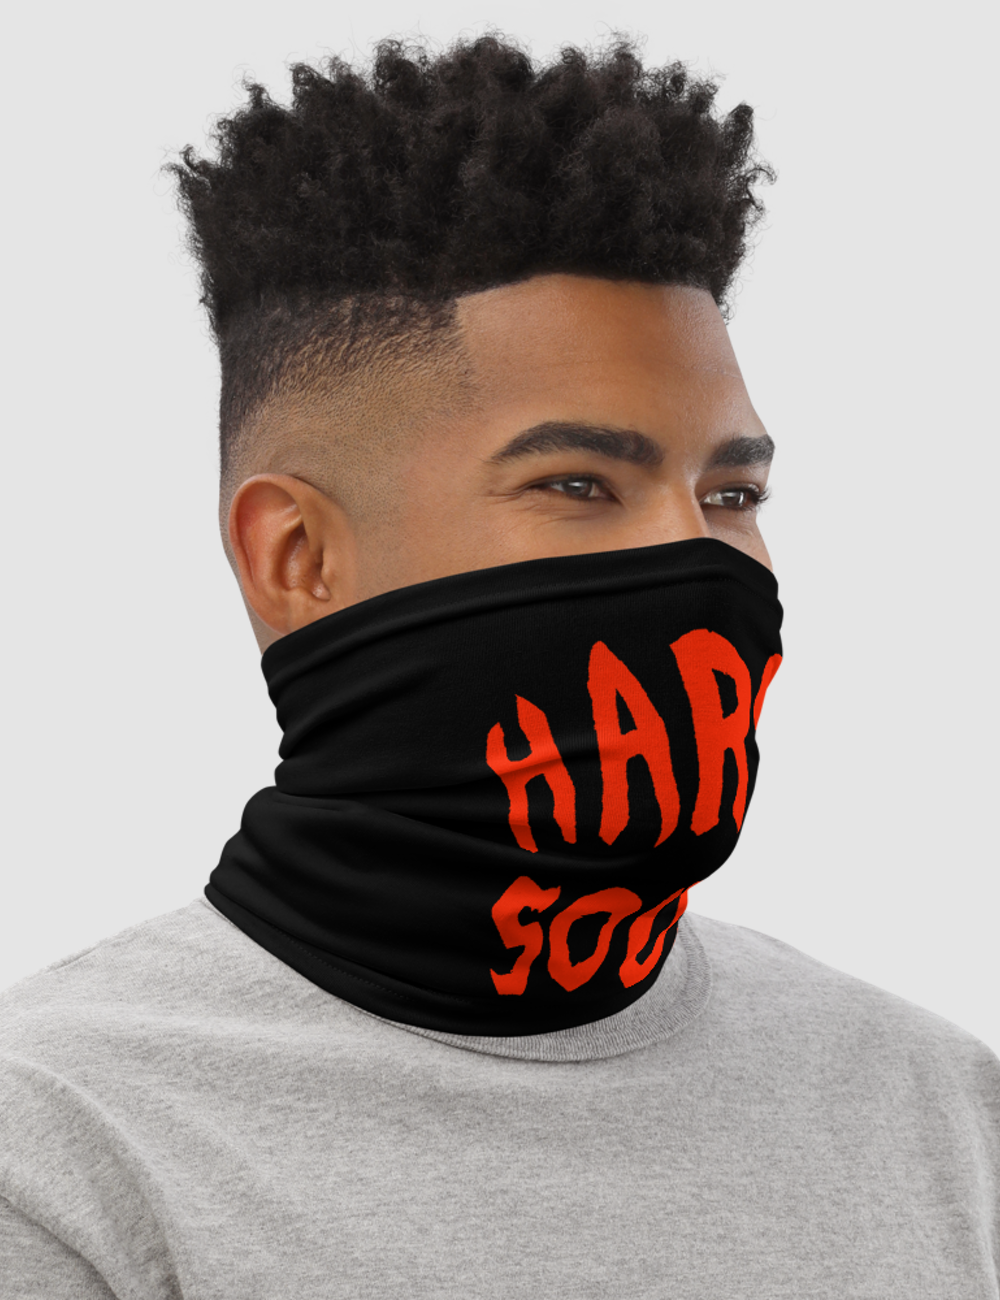 Harsh Souls (Red Print) | Neck Gaiter Face Mask OniTakai